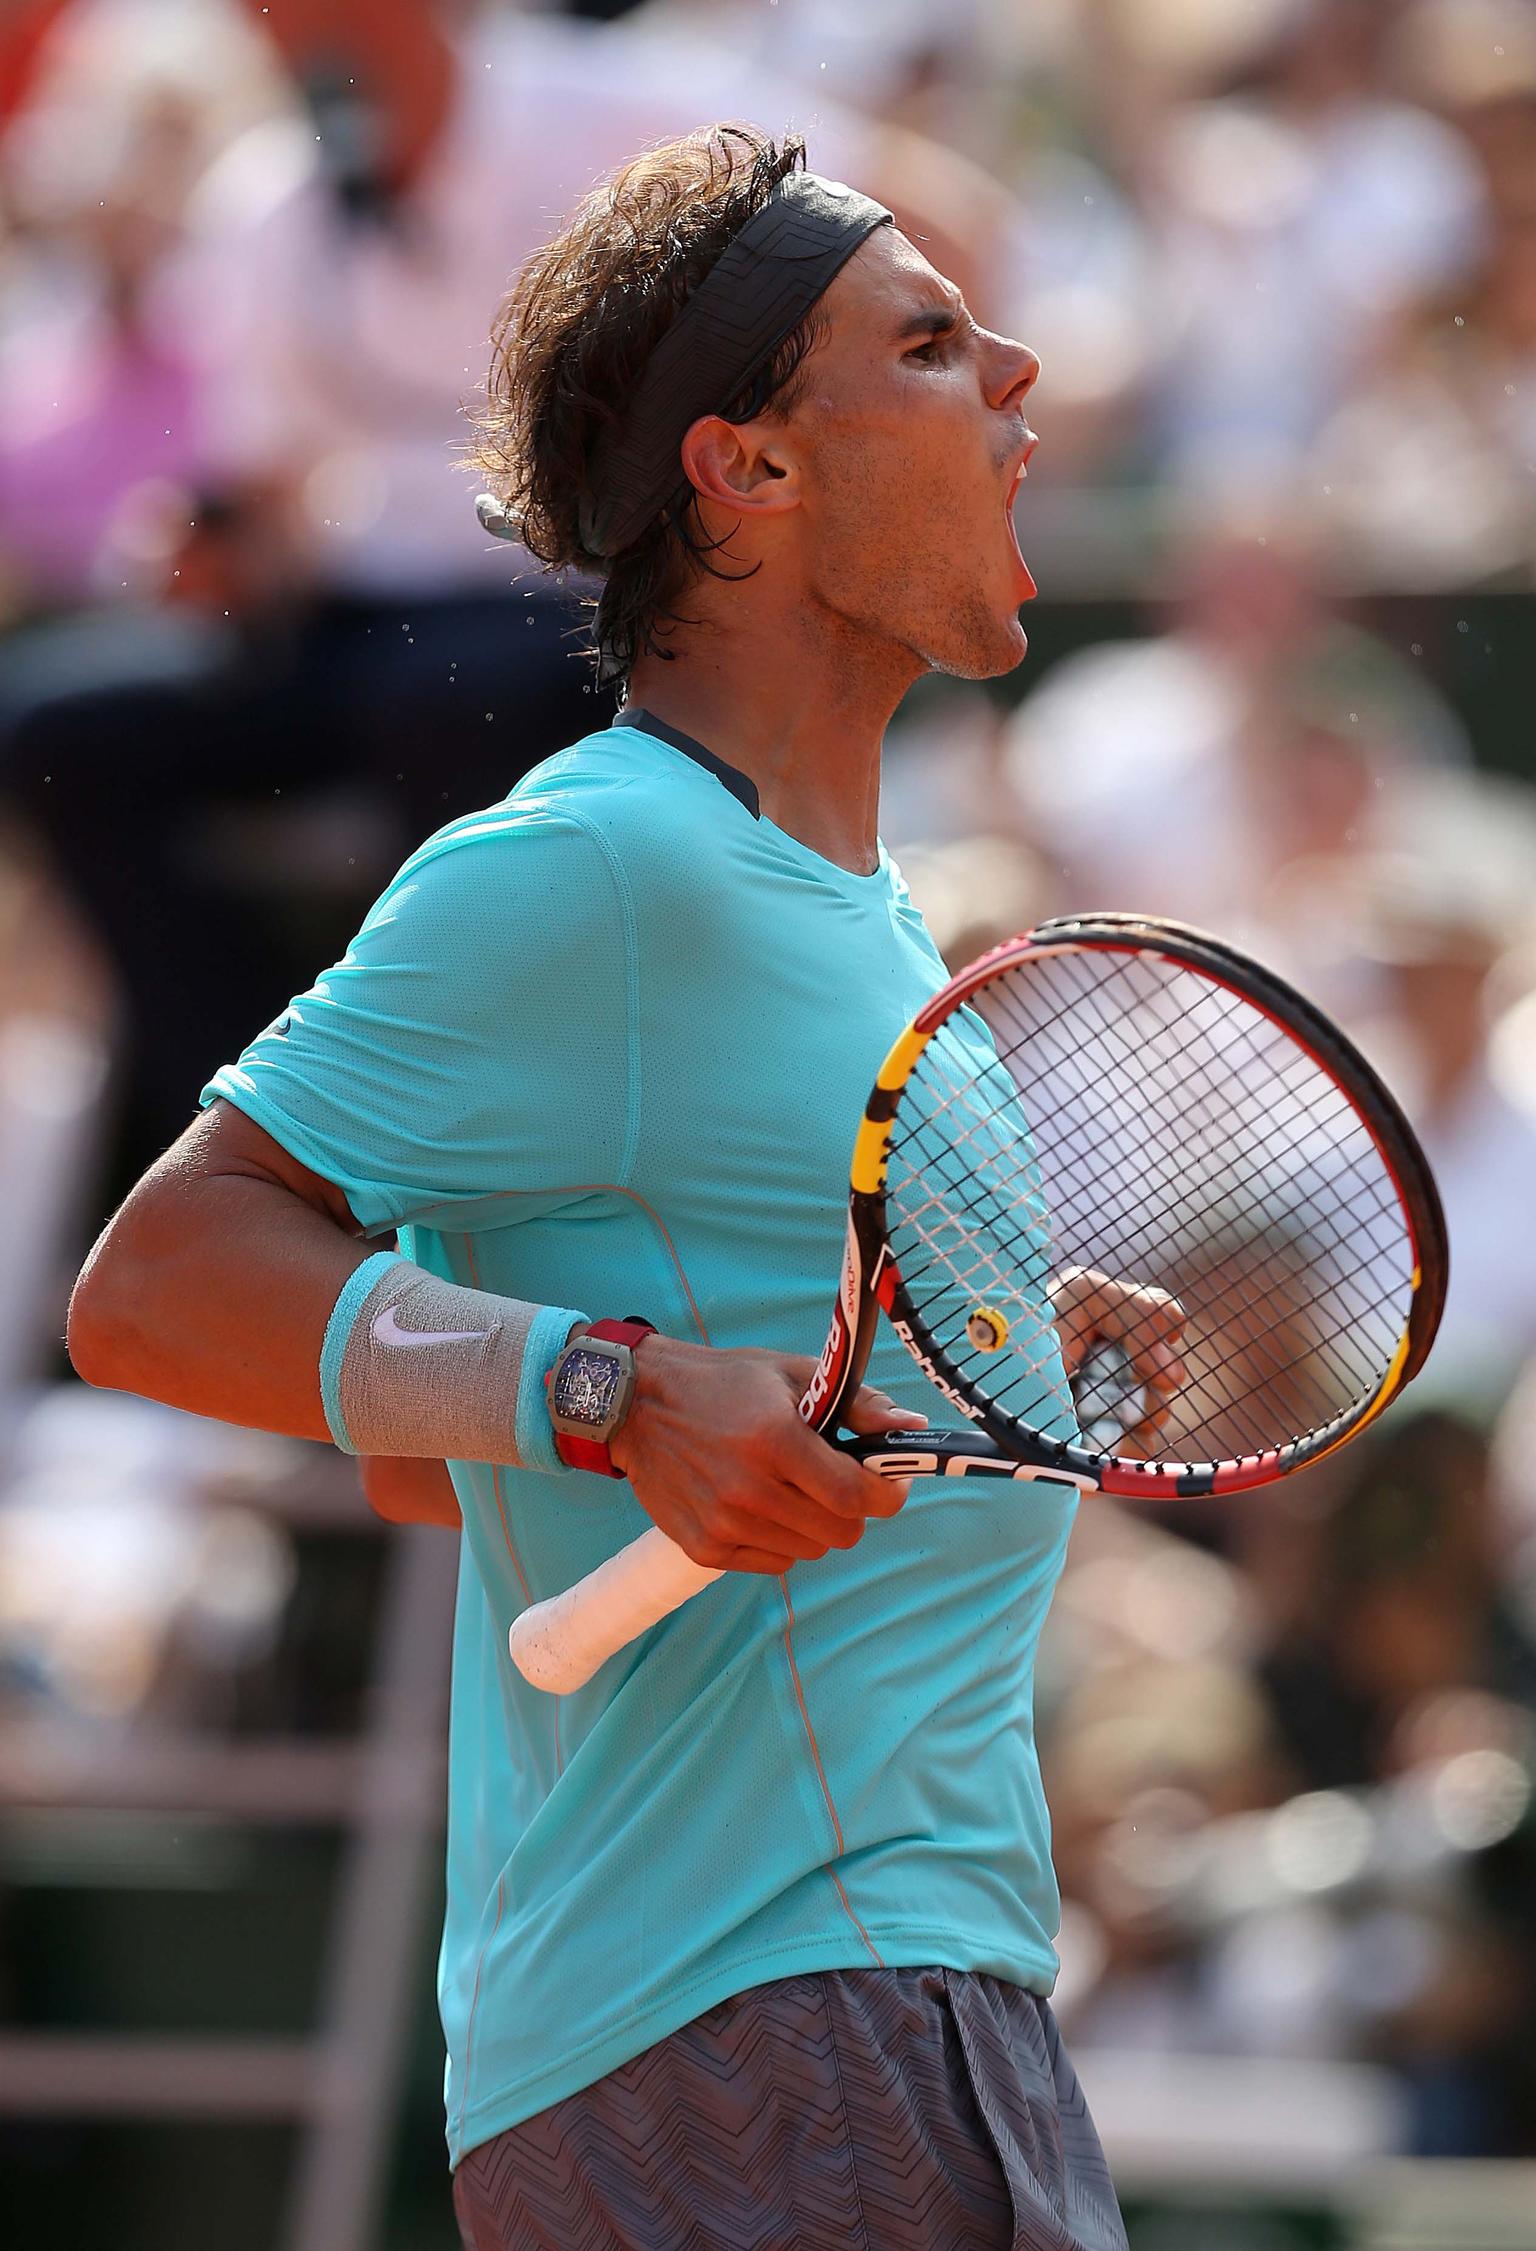 Spanish tennis star Rafael Nadal wore the Richard Mille RM 27-01 Tourbillon Rafael Nadal watch on court during Wimbledon 2014. Image: Getty